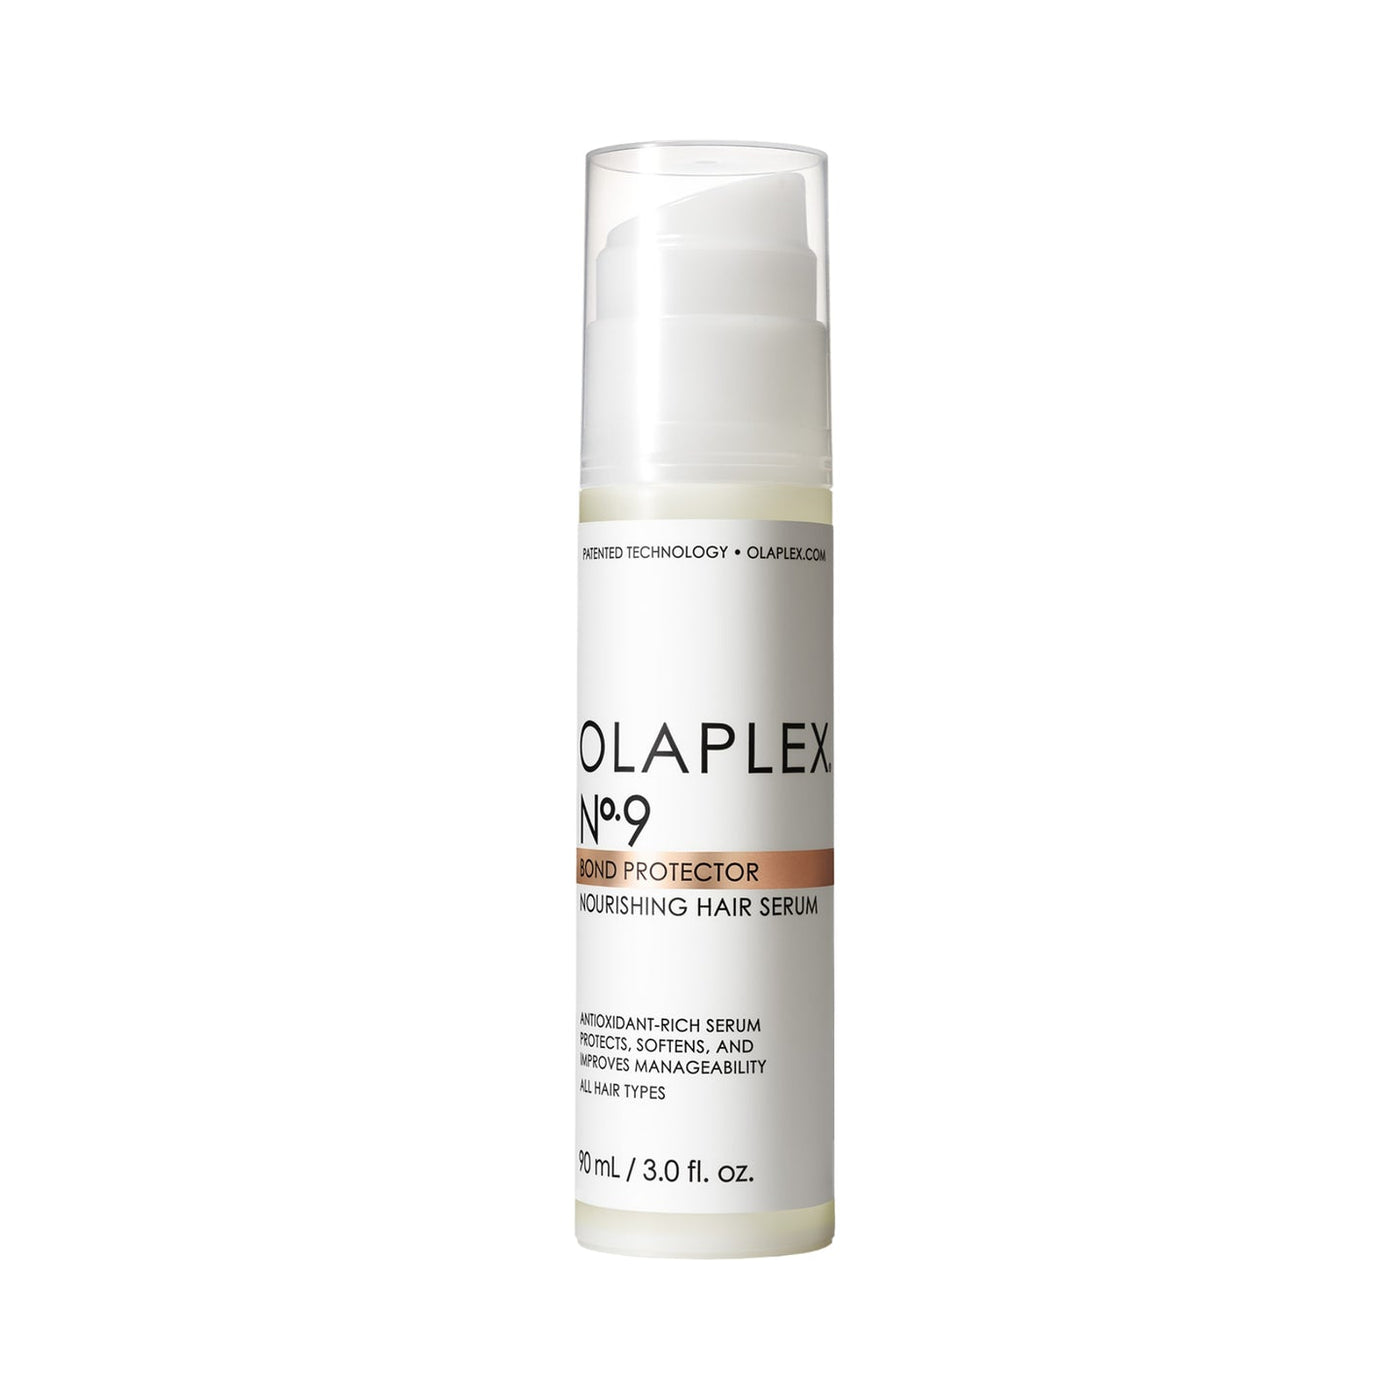 OLAPLEX - No. 9 Bond Protector Nourishing Hair Serum